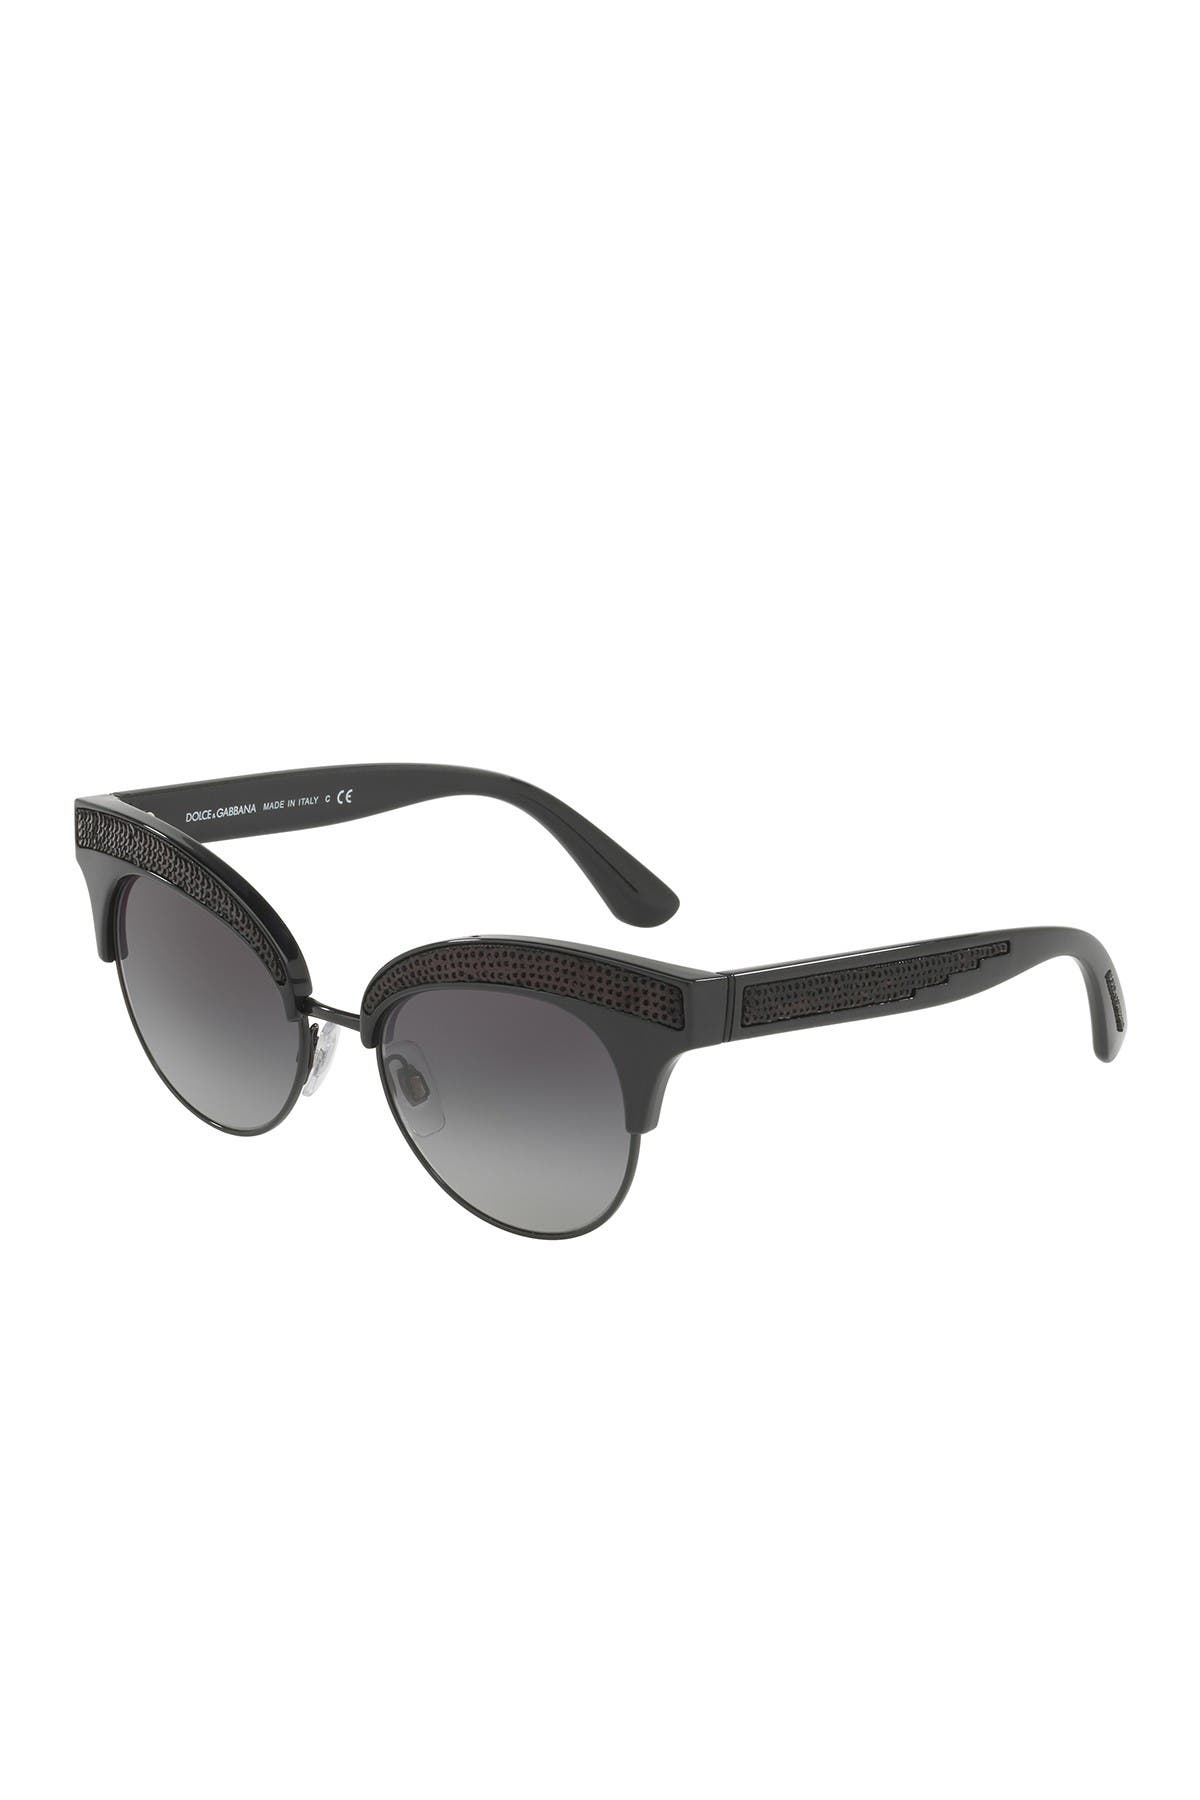 dolce & gabbana 50mm embellished cat eye sunglasses